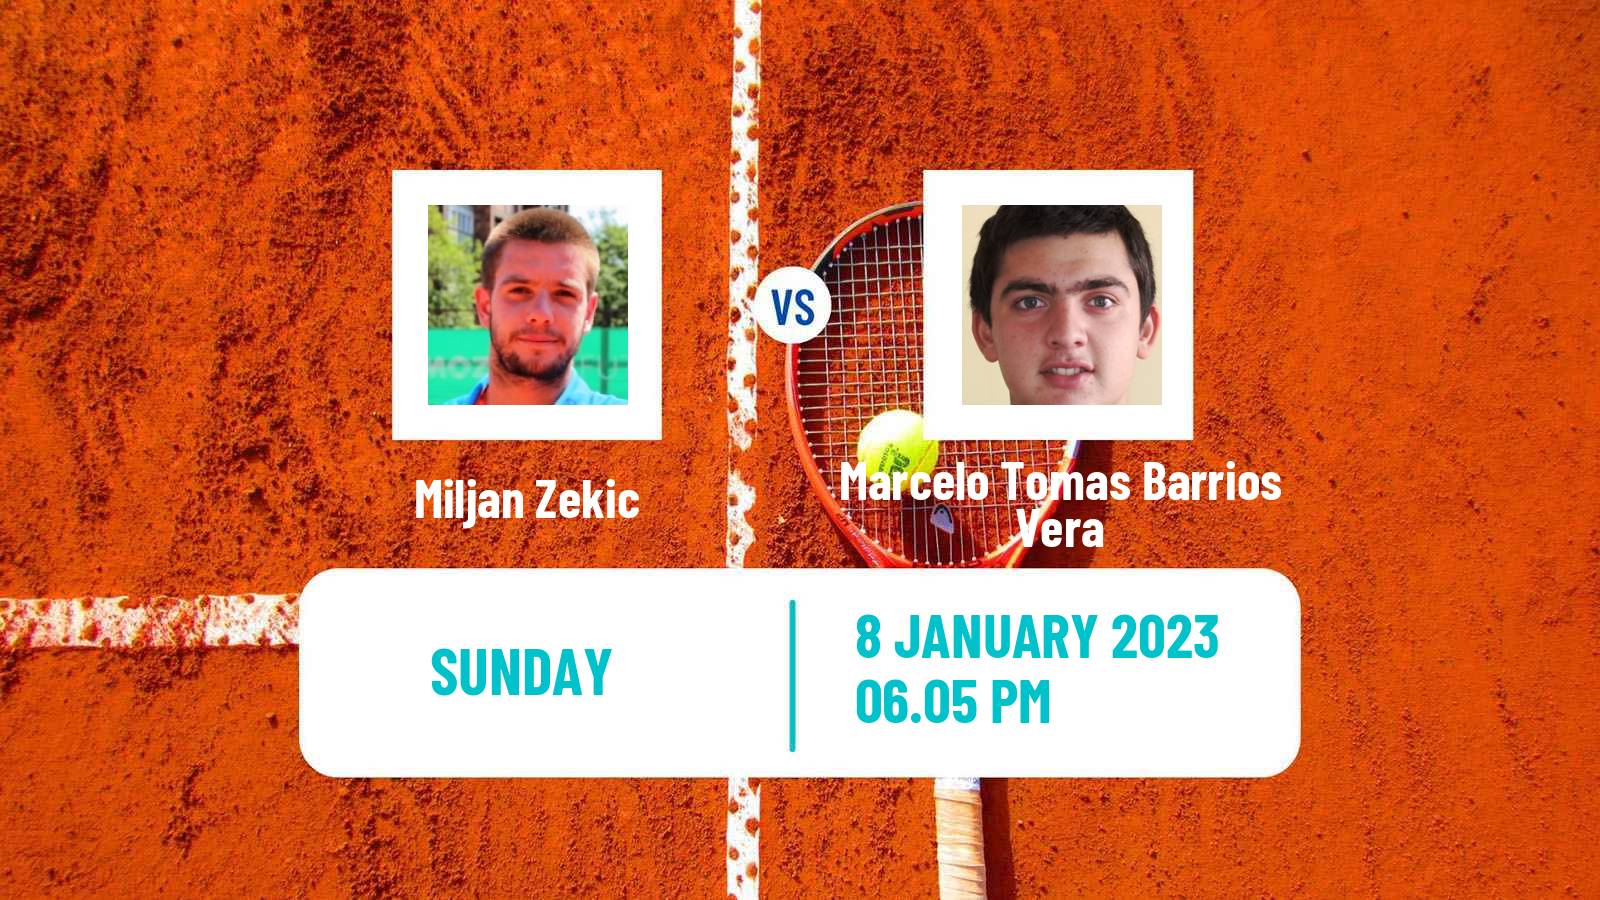 Tennis ATP Australian Open Miljan Zekic - Marcelo Tomas Barrios Vera